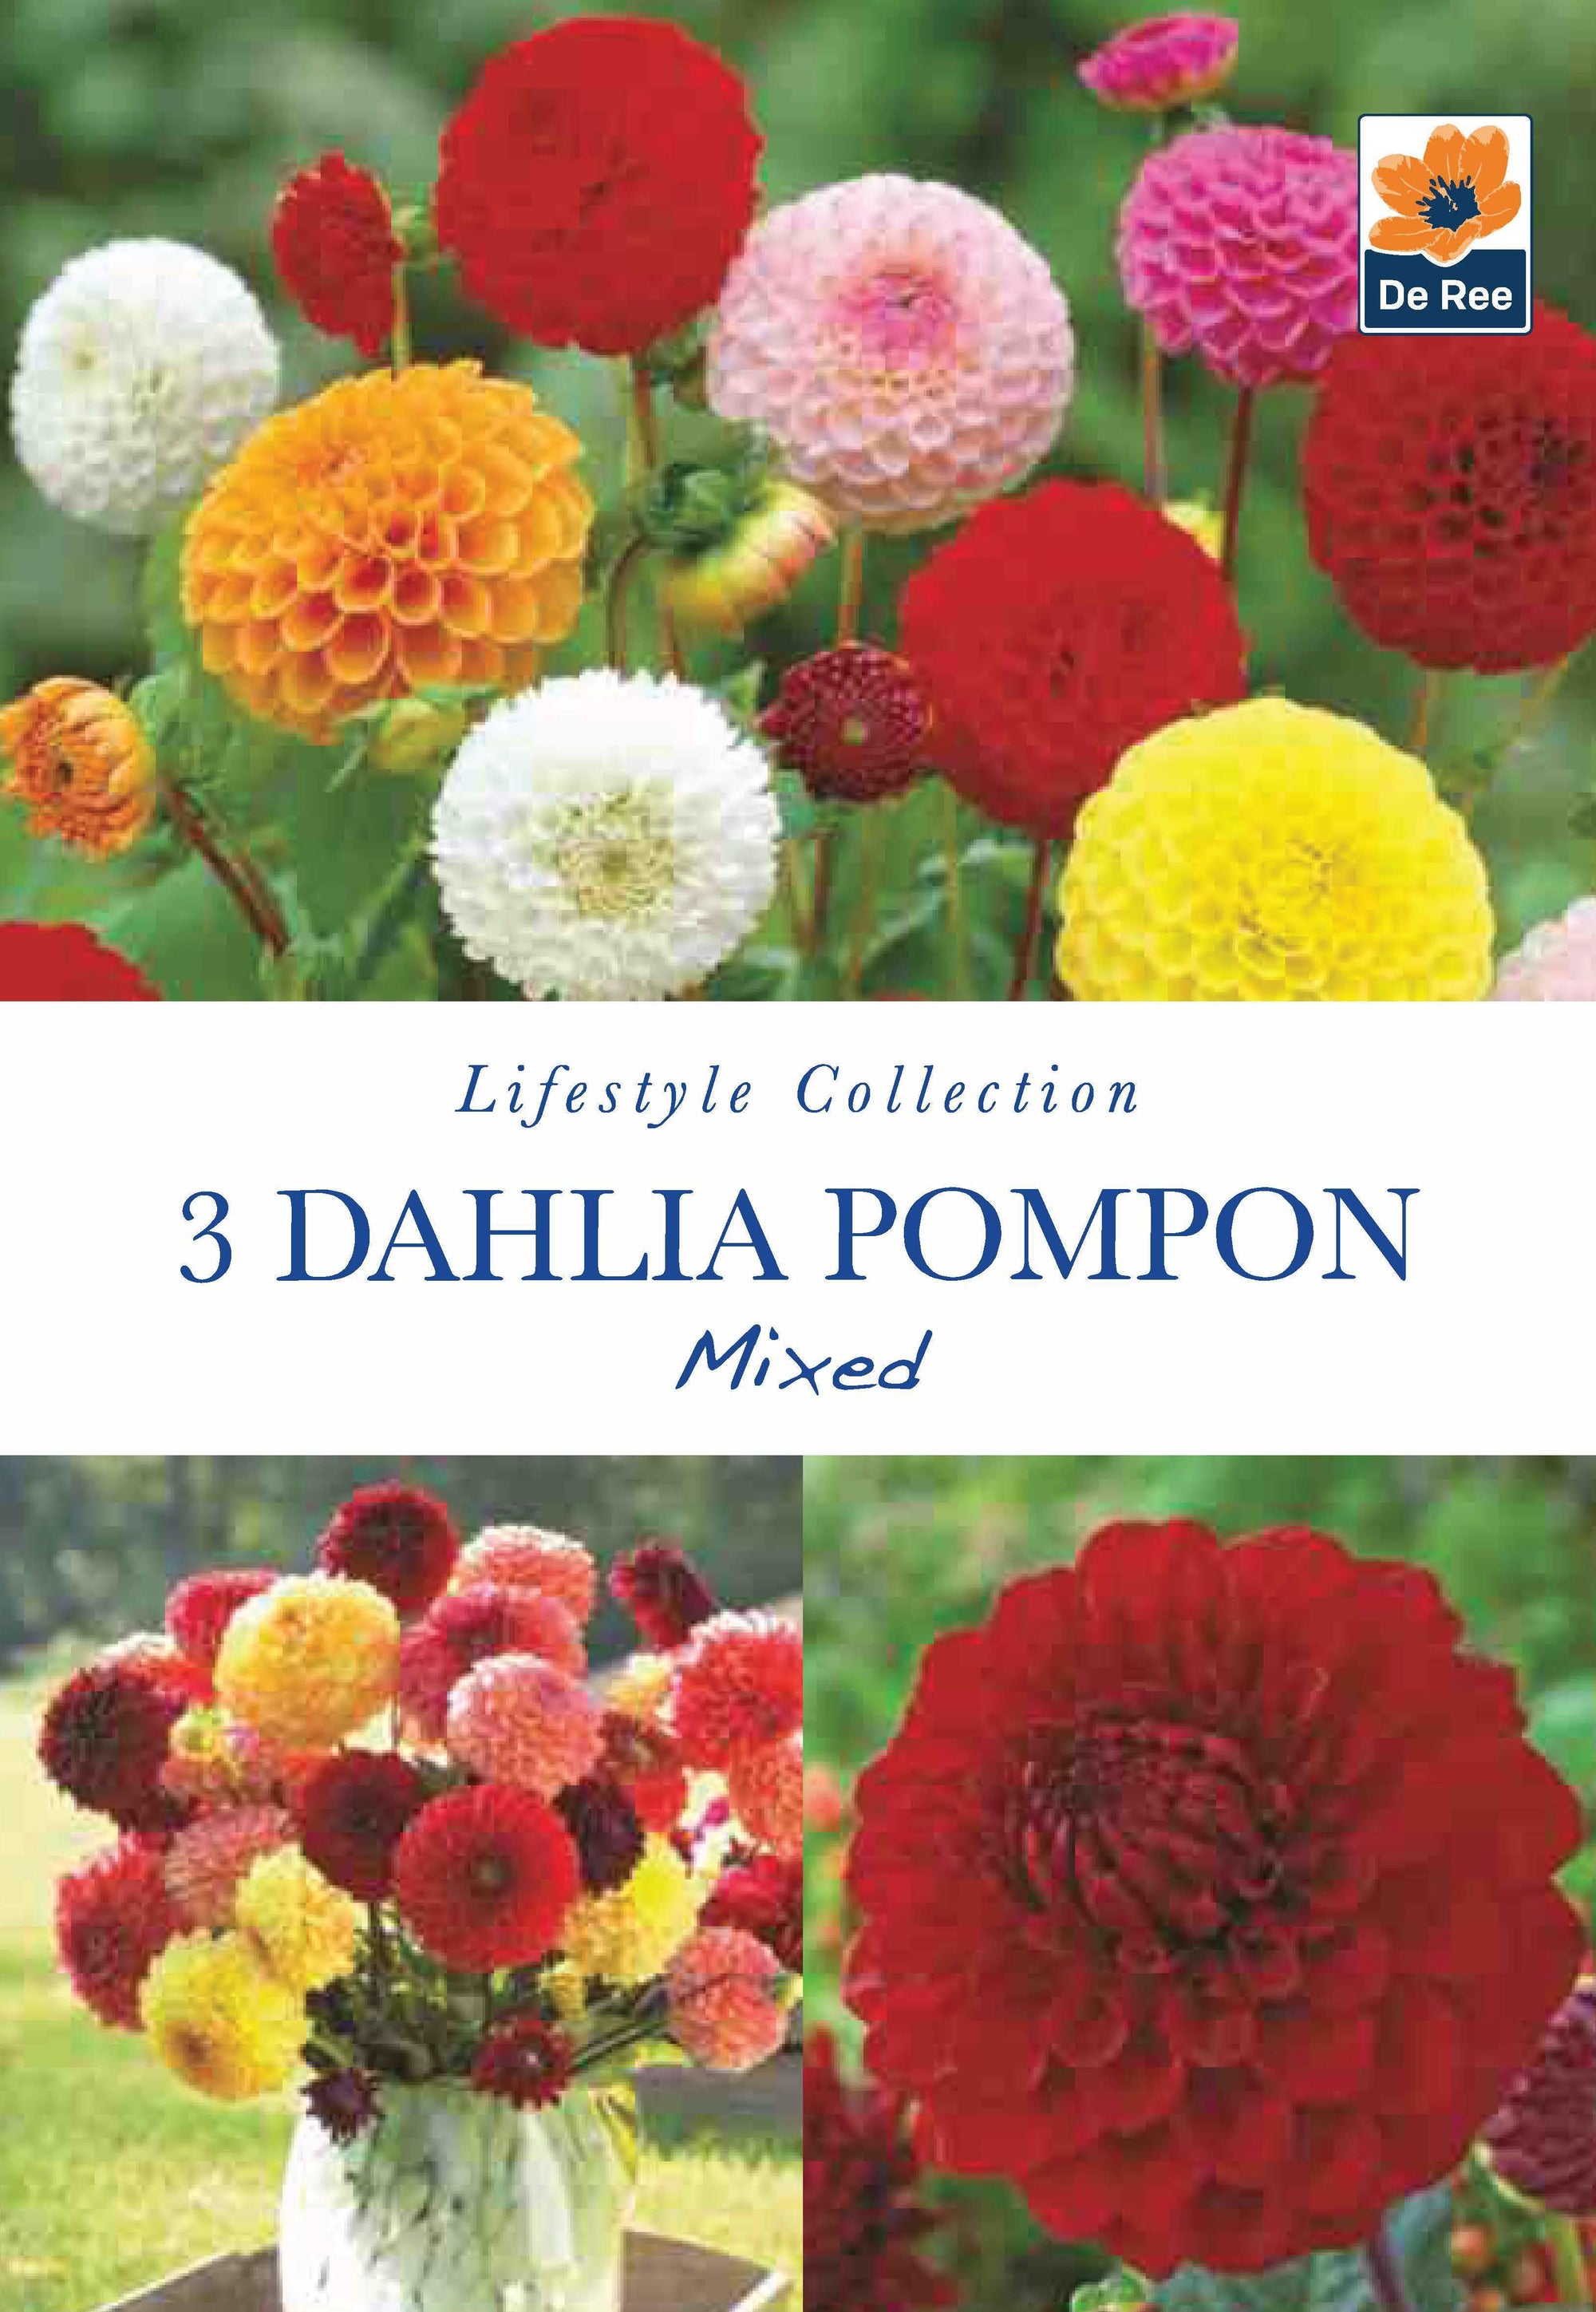 Mixed Dahlia Pompons (3 Tubers)